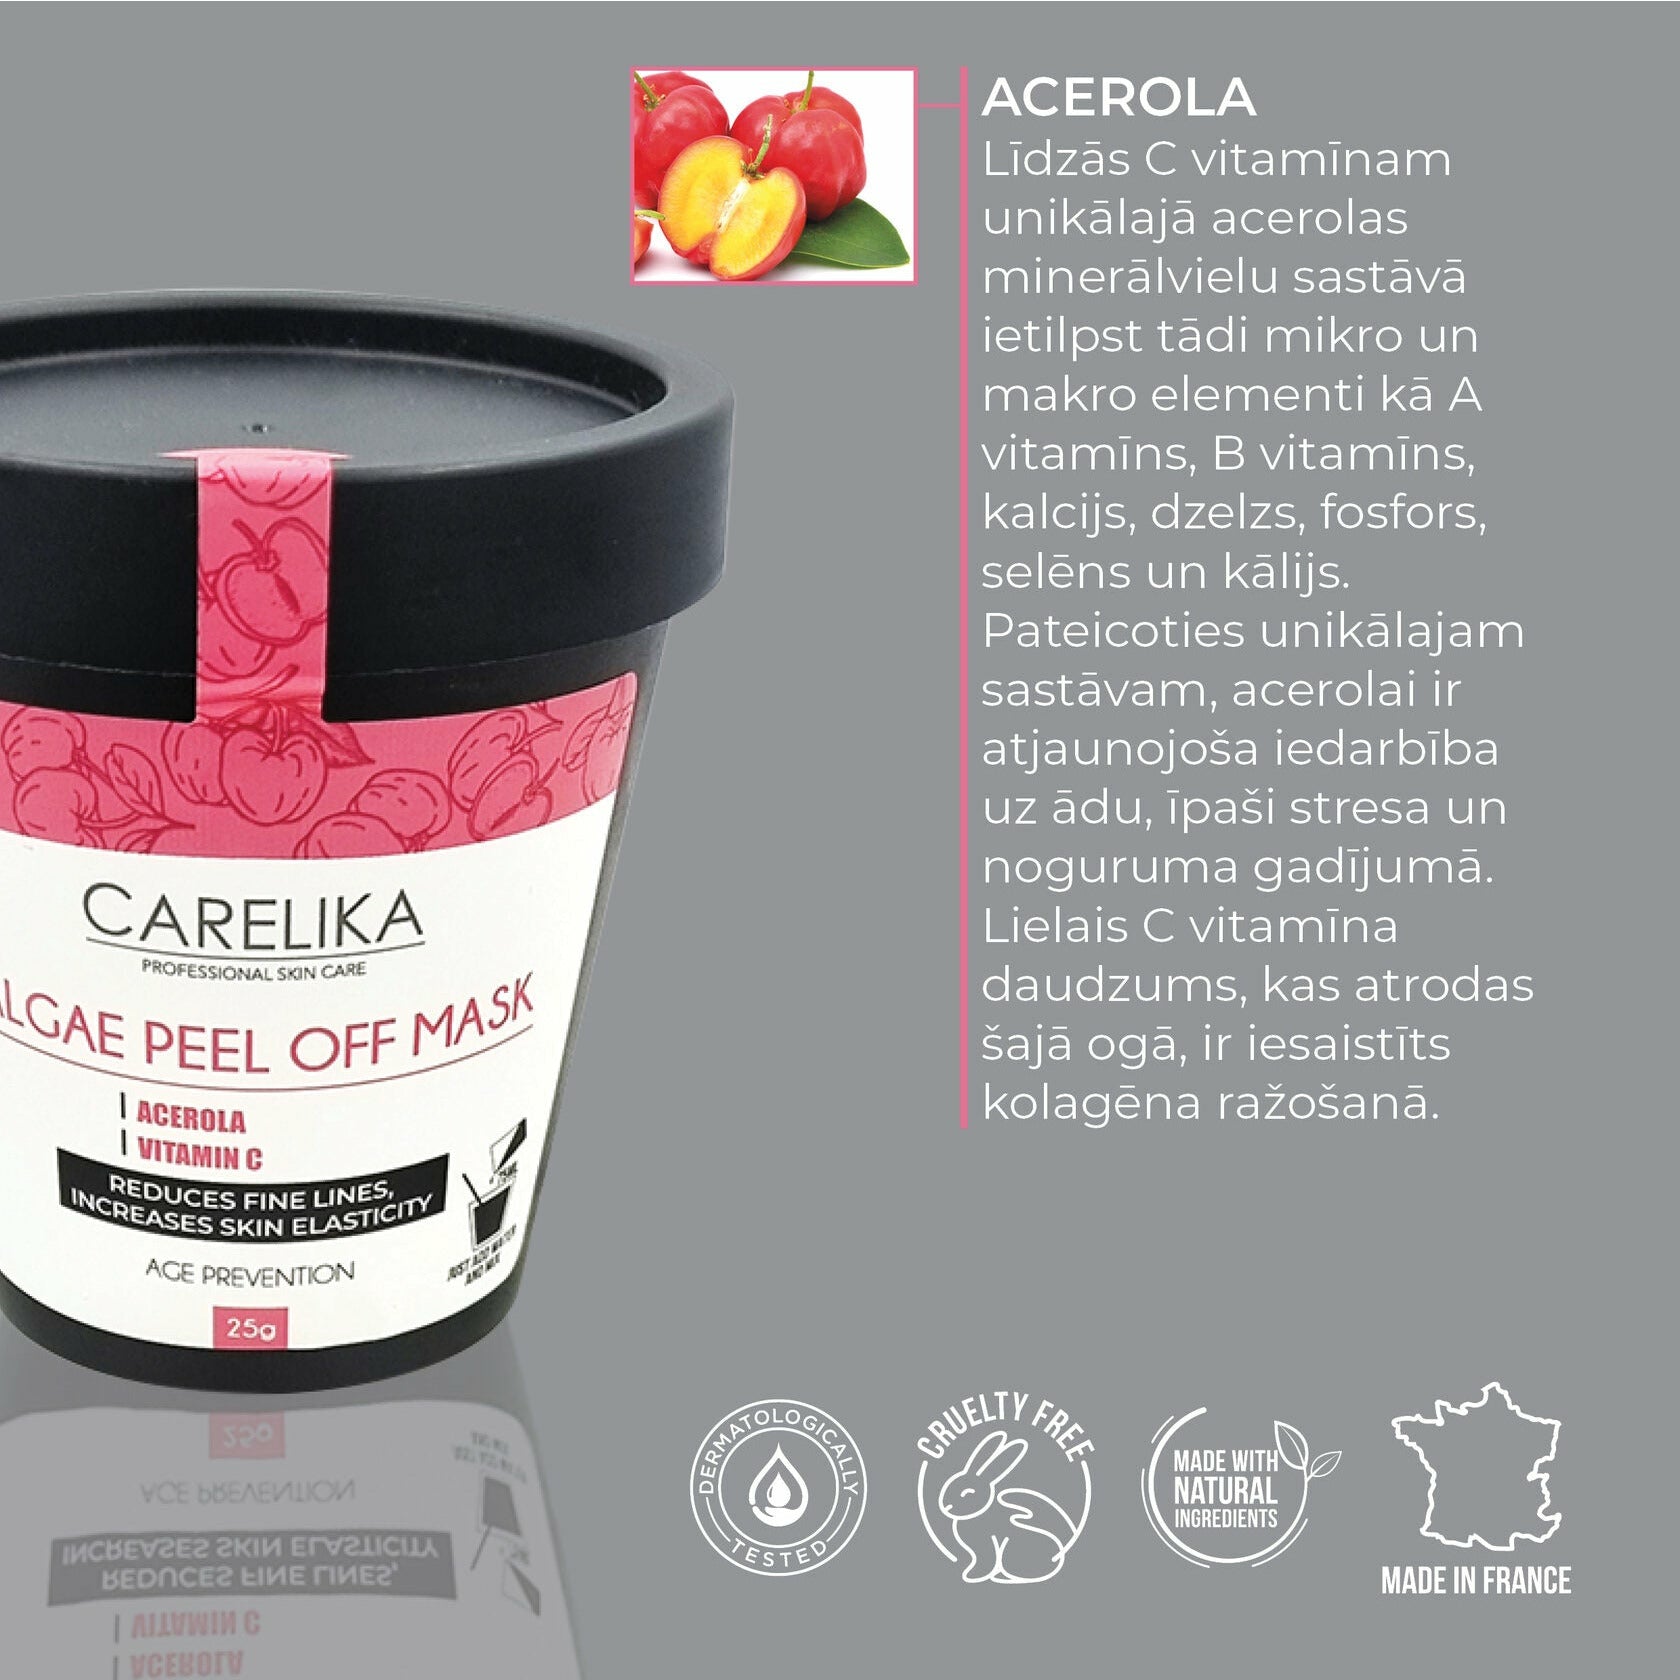 Algae peel off mask with acerola and vitamin C by CARELIKA | Lika-J